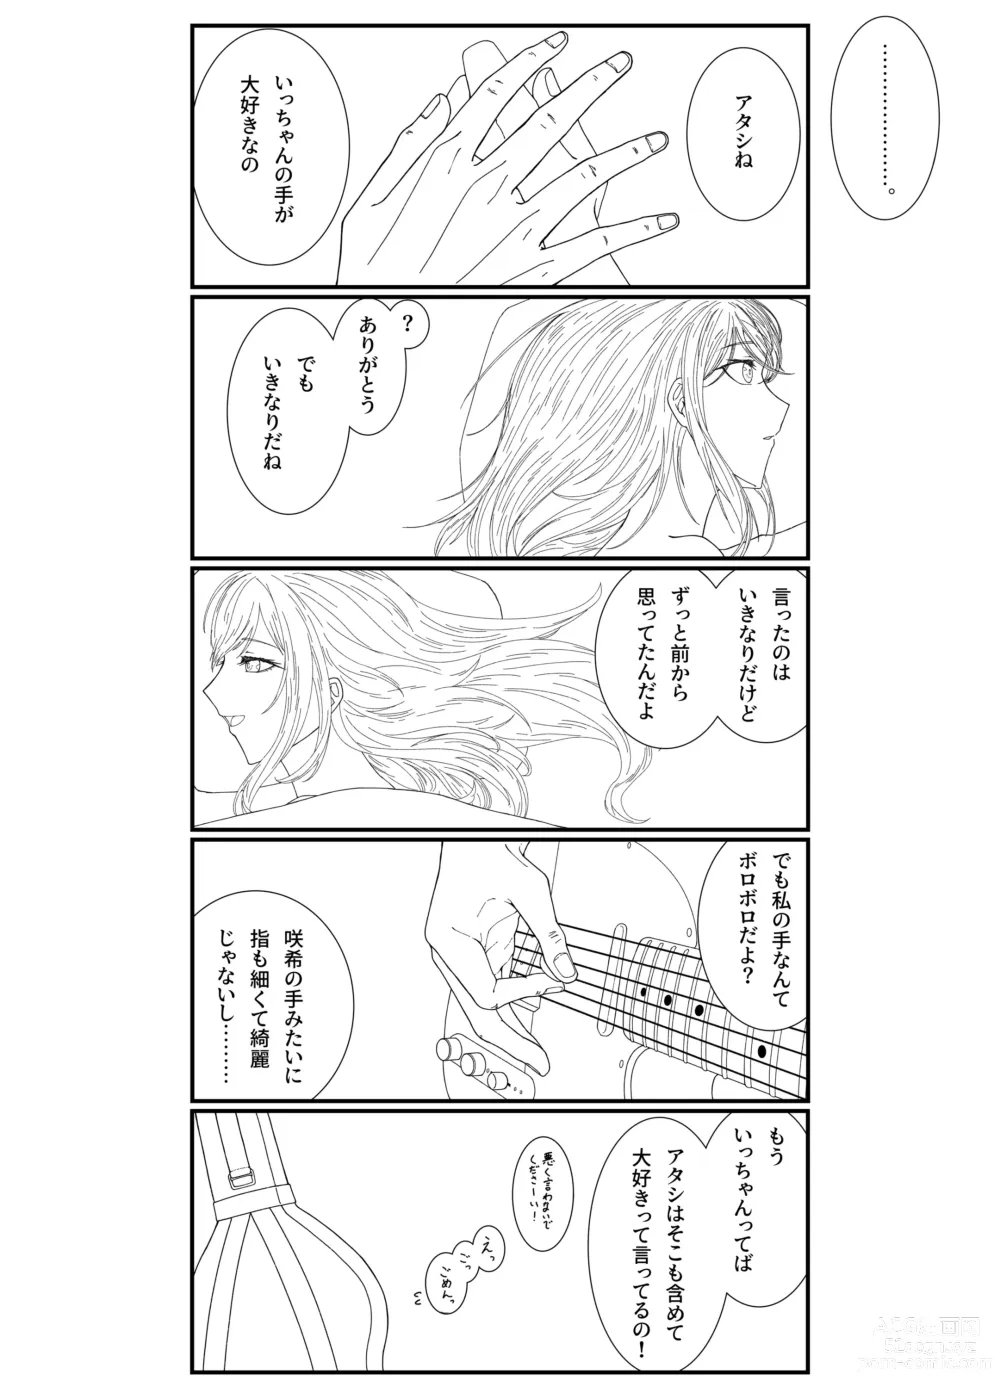 Page 26 of doujinshi Sore dake.